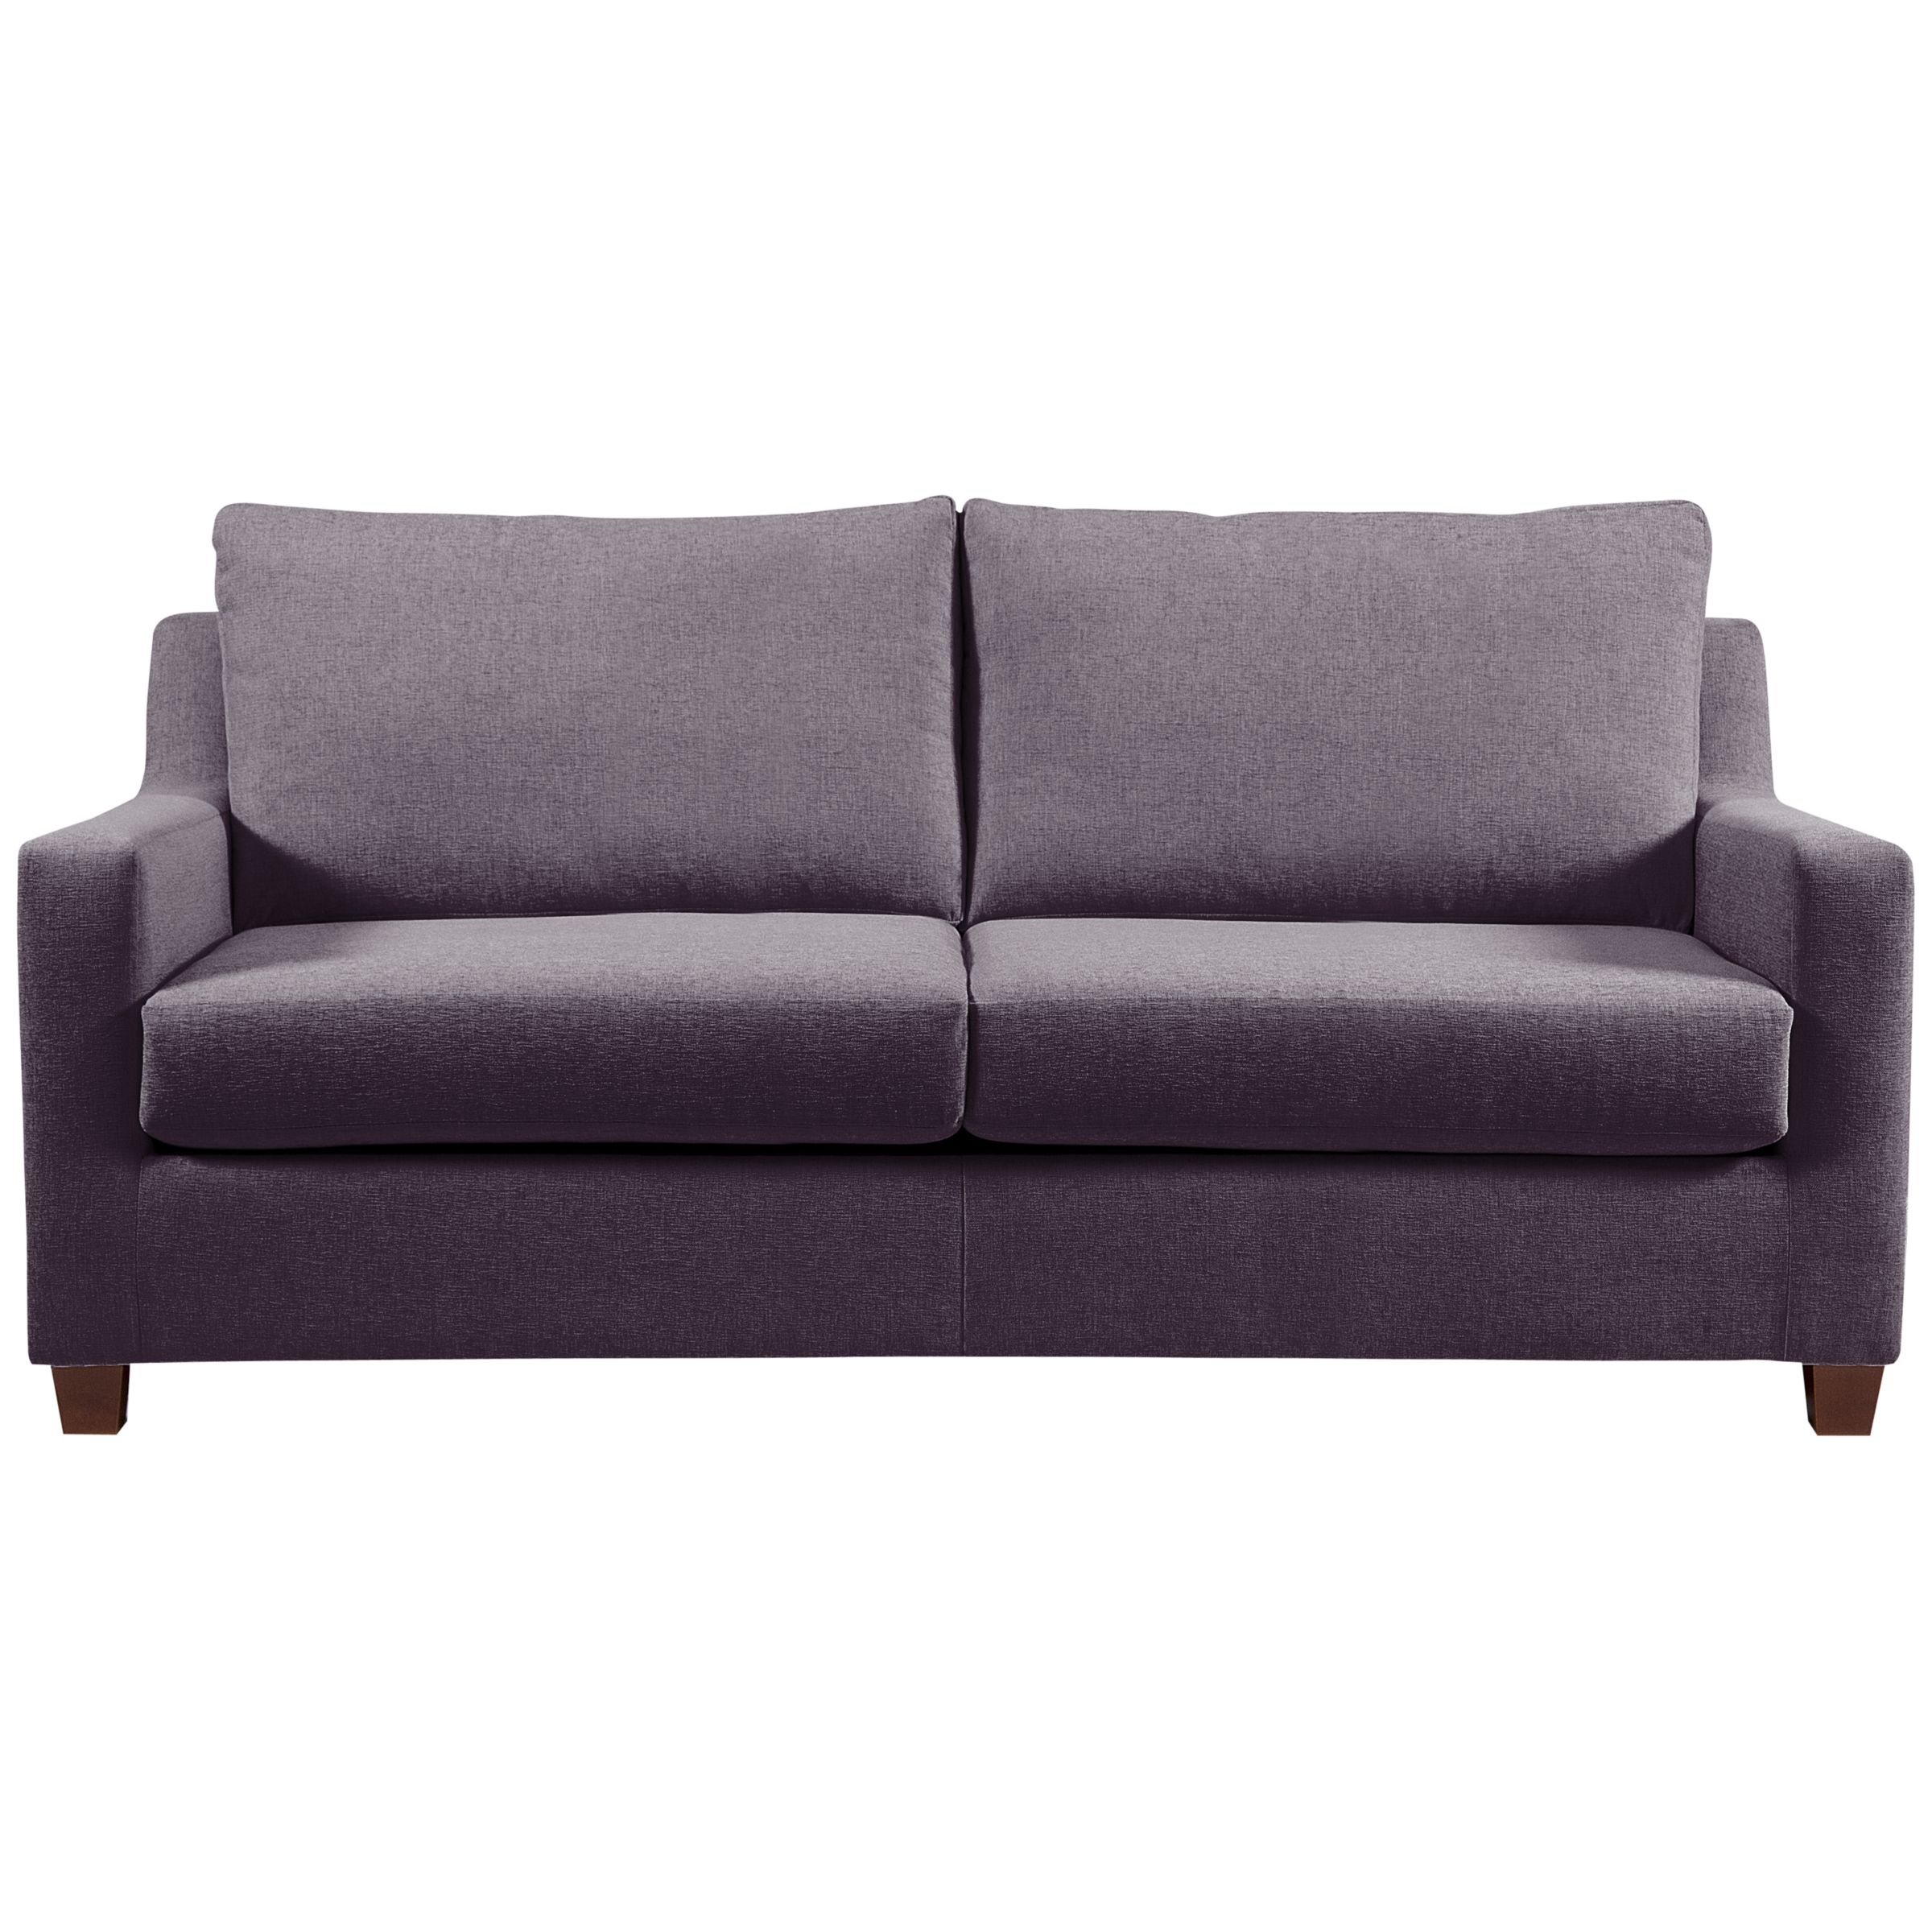 John Lewis Bizet Large Sofa Bed with Open Sprung Mattress, Purple, width 208cm